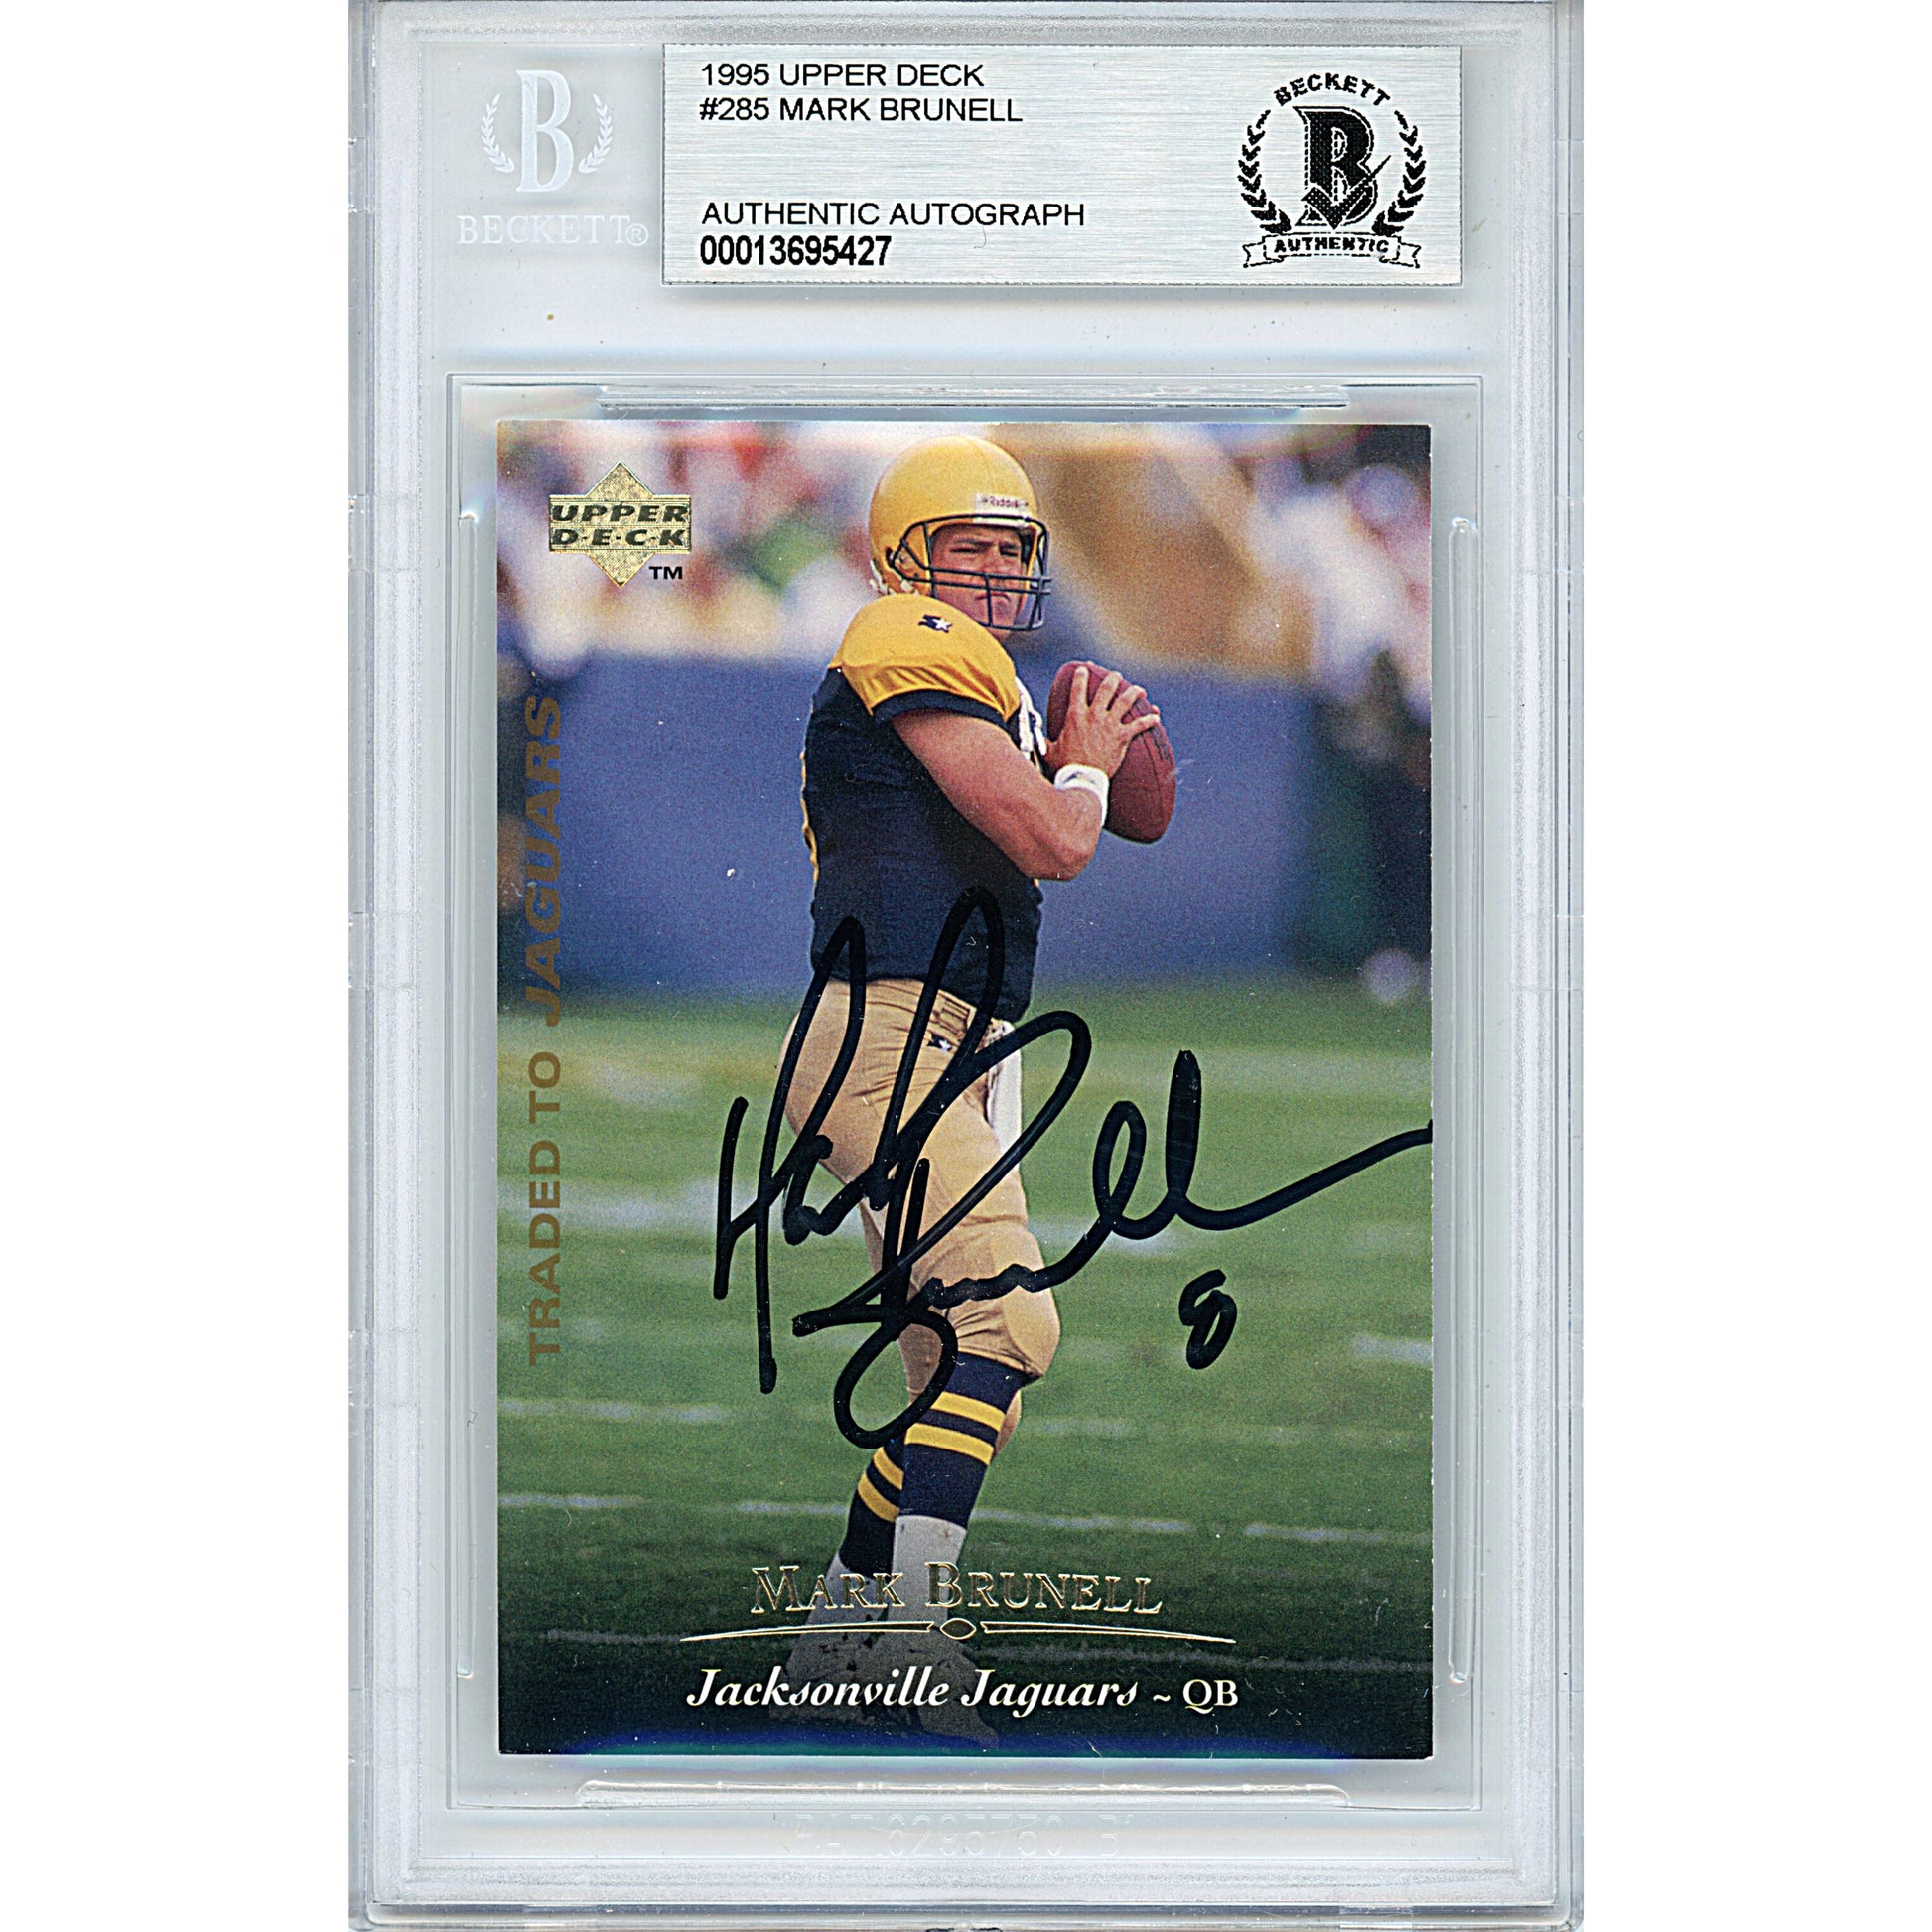 Football- Autographed- Mark Brunell Signed Green Bay Packers 1995 Upper Deck Football Card Beckett BAS Slabbed 00013695427 - 101